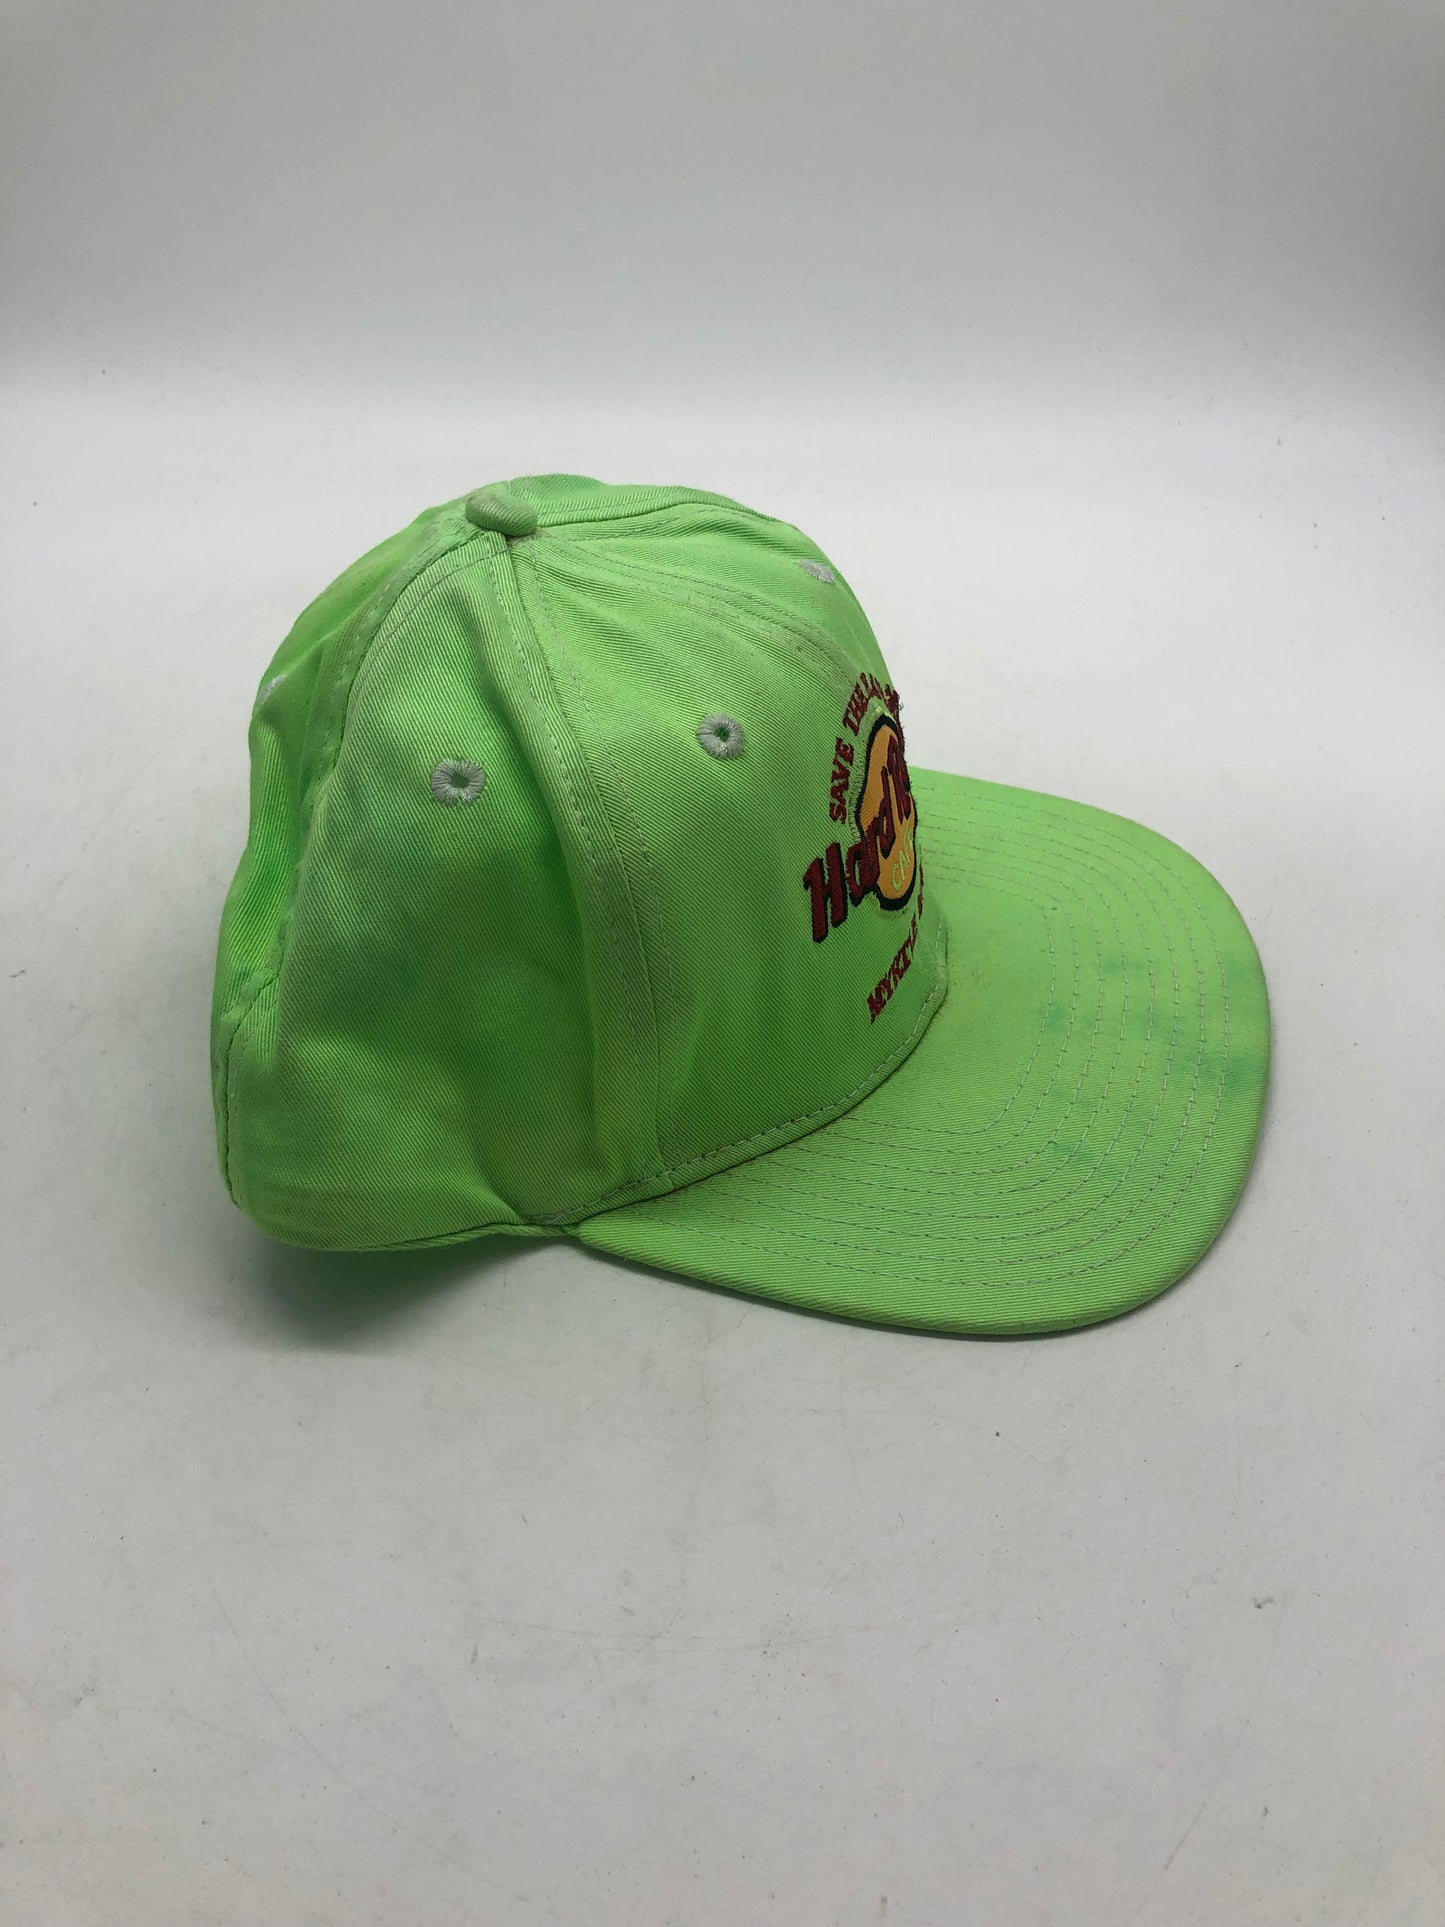 VTG Neon Green Hard Rock Cafe Myrtle Beach SnapBack Hat